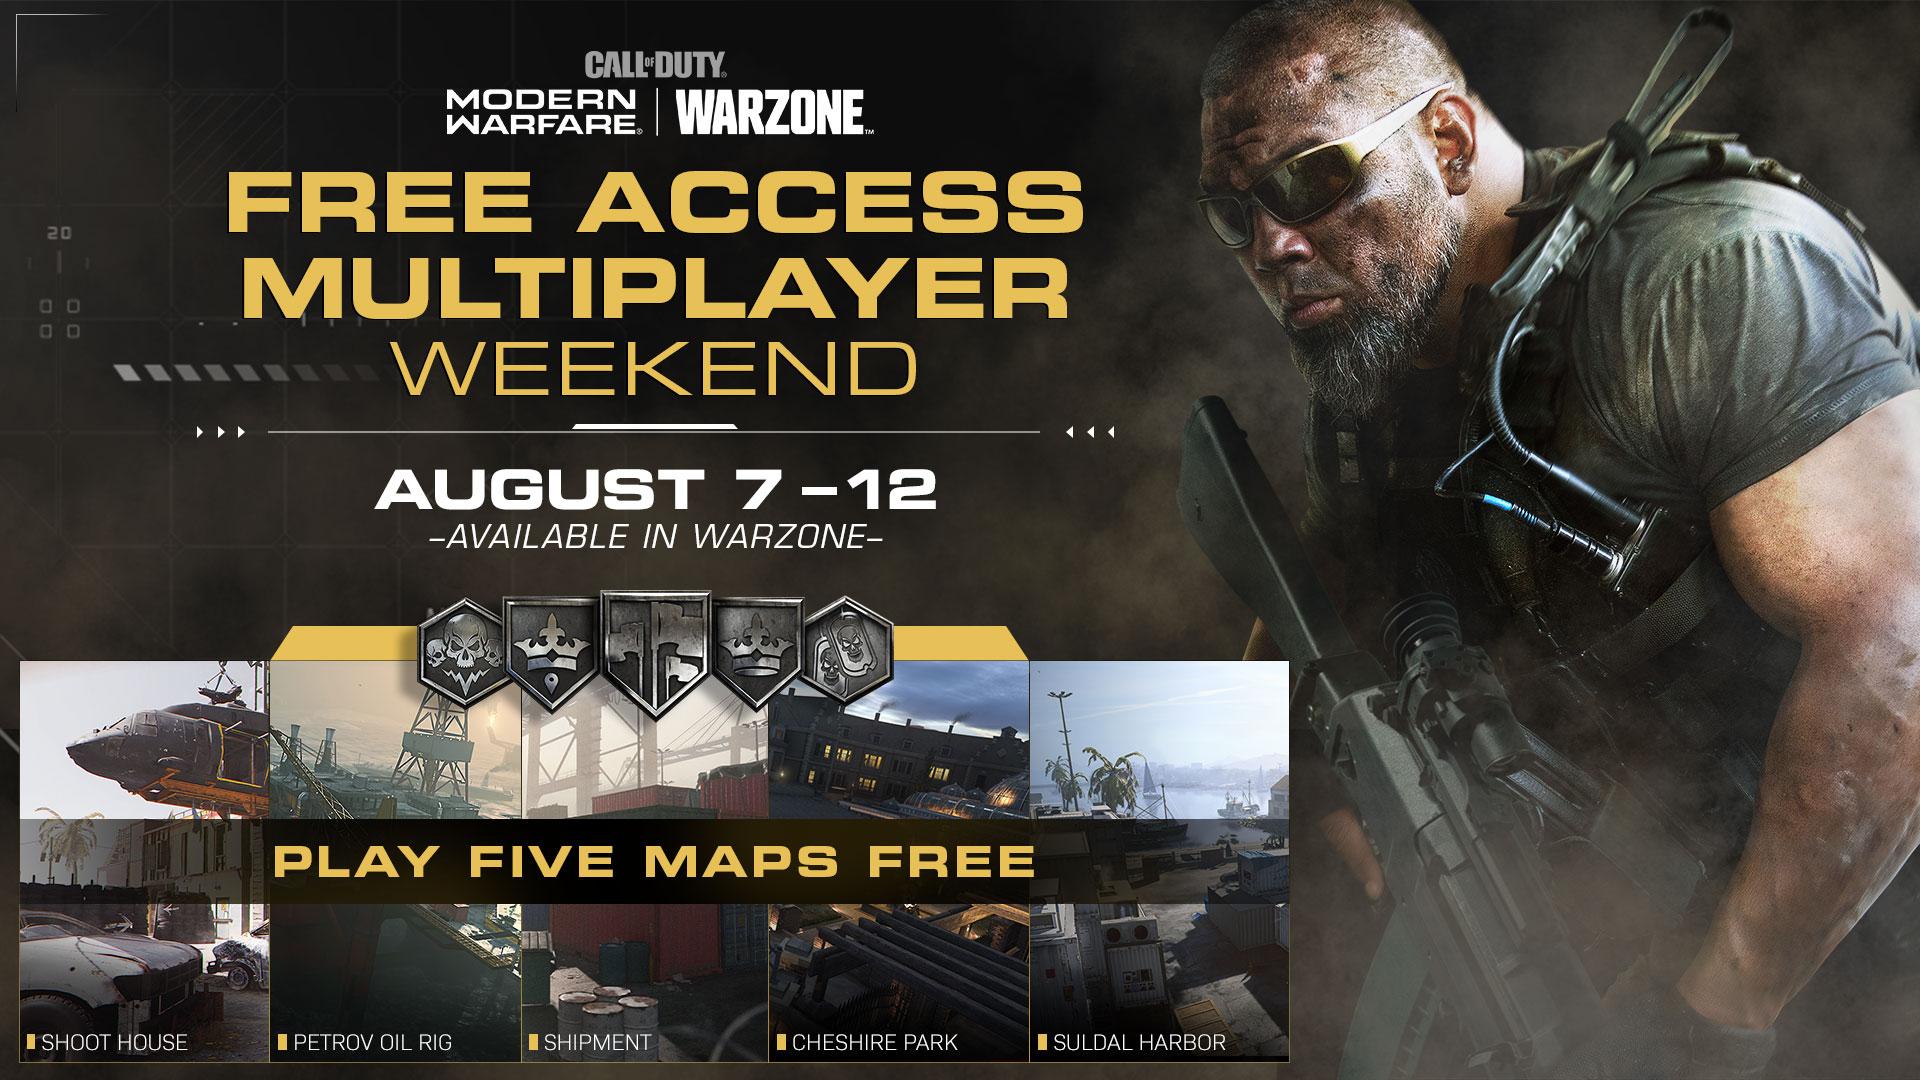 Free multiplayer weekend in Modern Warfare